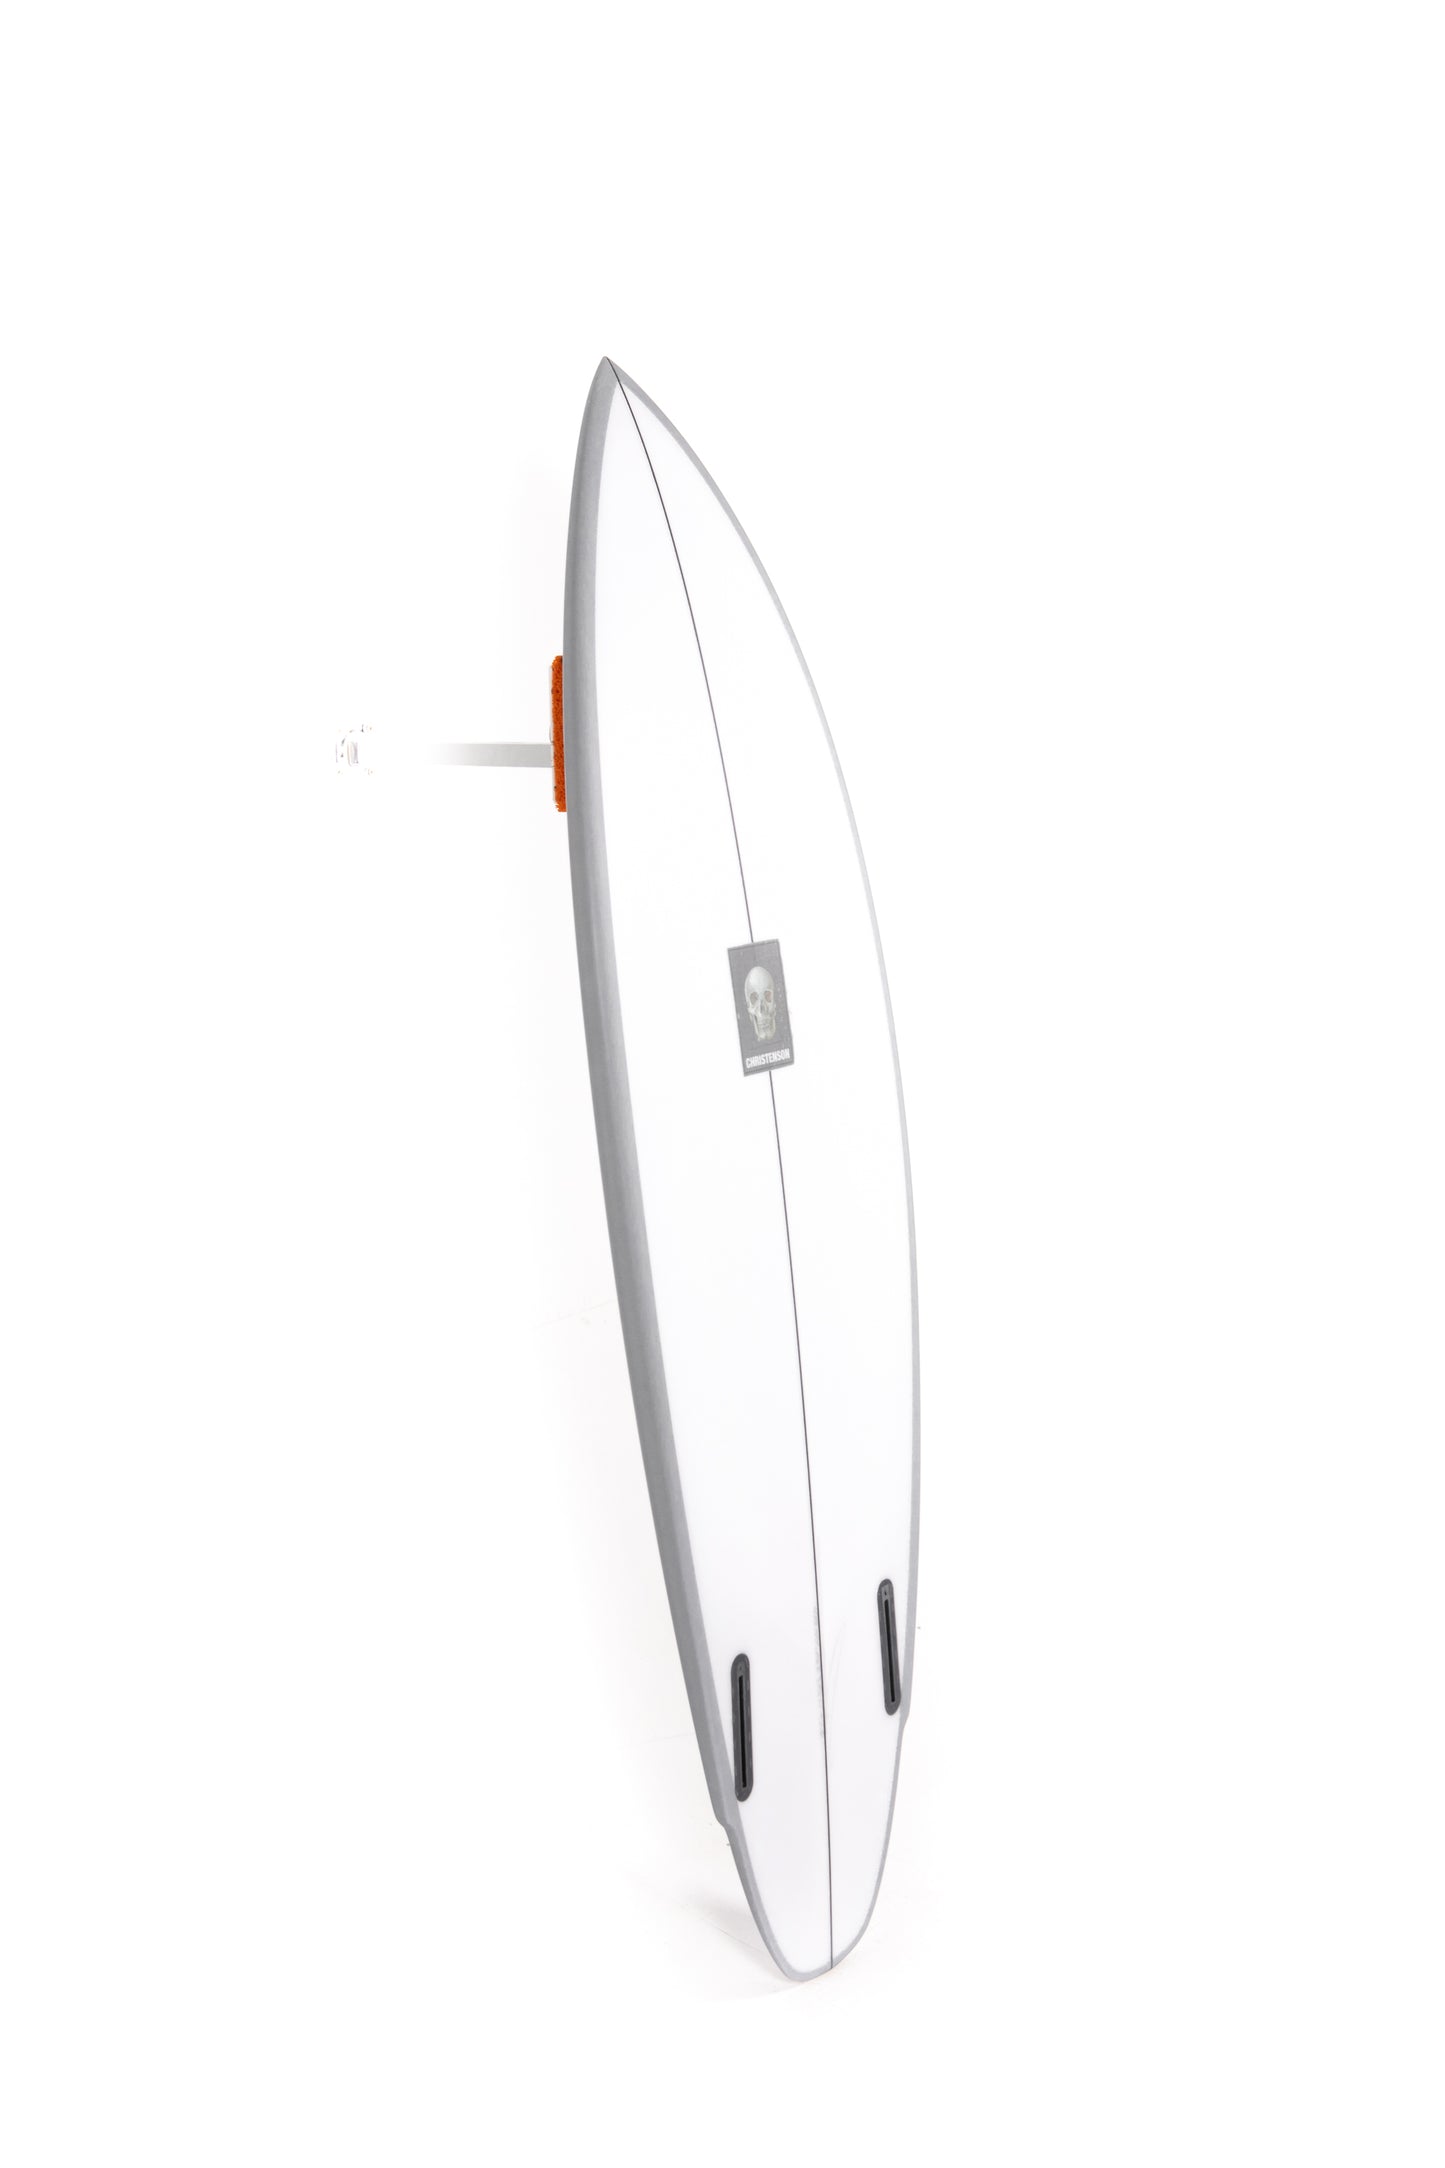 
                  
                    Pukas Surf Shop - Christenson Surfboards - LANE SPLITTER - 5'5" x 19 7/16 x 2 3/8 - CX05821
                  
                